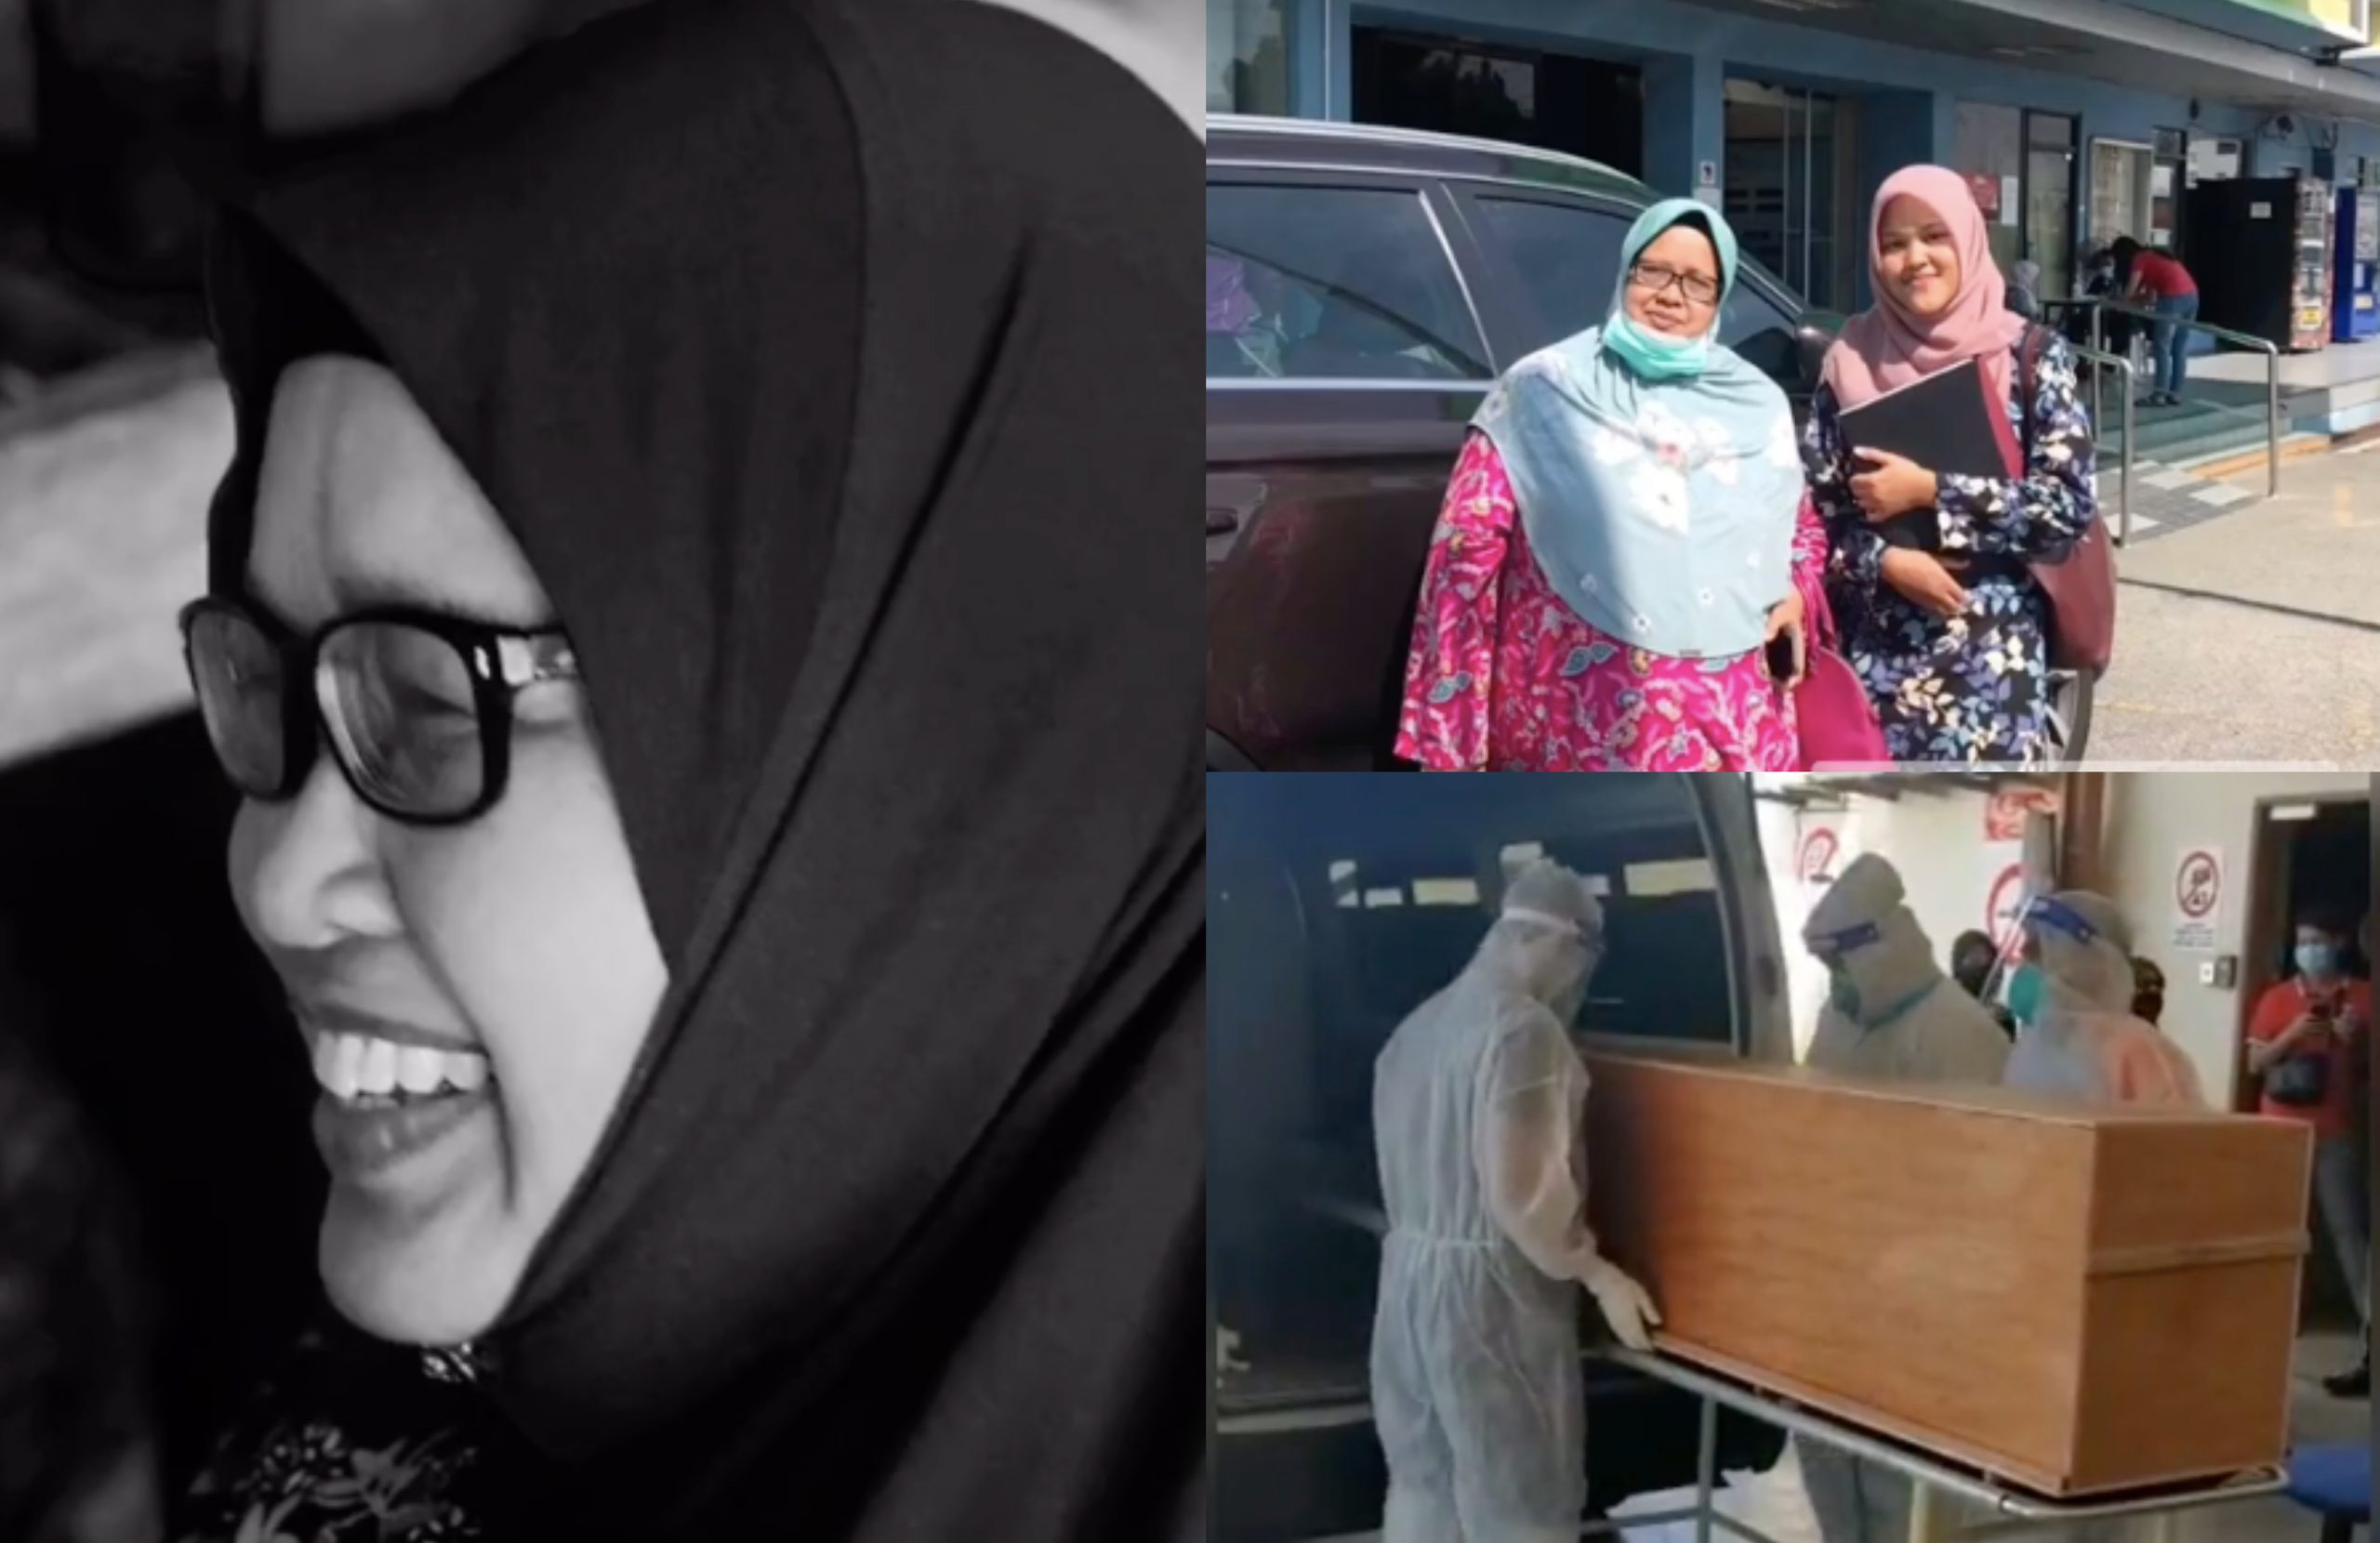 [VIDEO] ‘Sempat’ Luang Masa Bersama Arwah Ibu Selepas Balik Dari Kampus, Pelajar Sebak Ibu Meninggal Dunia Akibat Covid-19